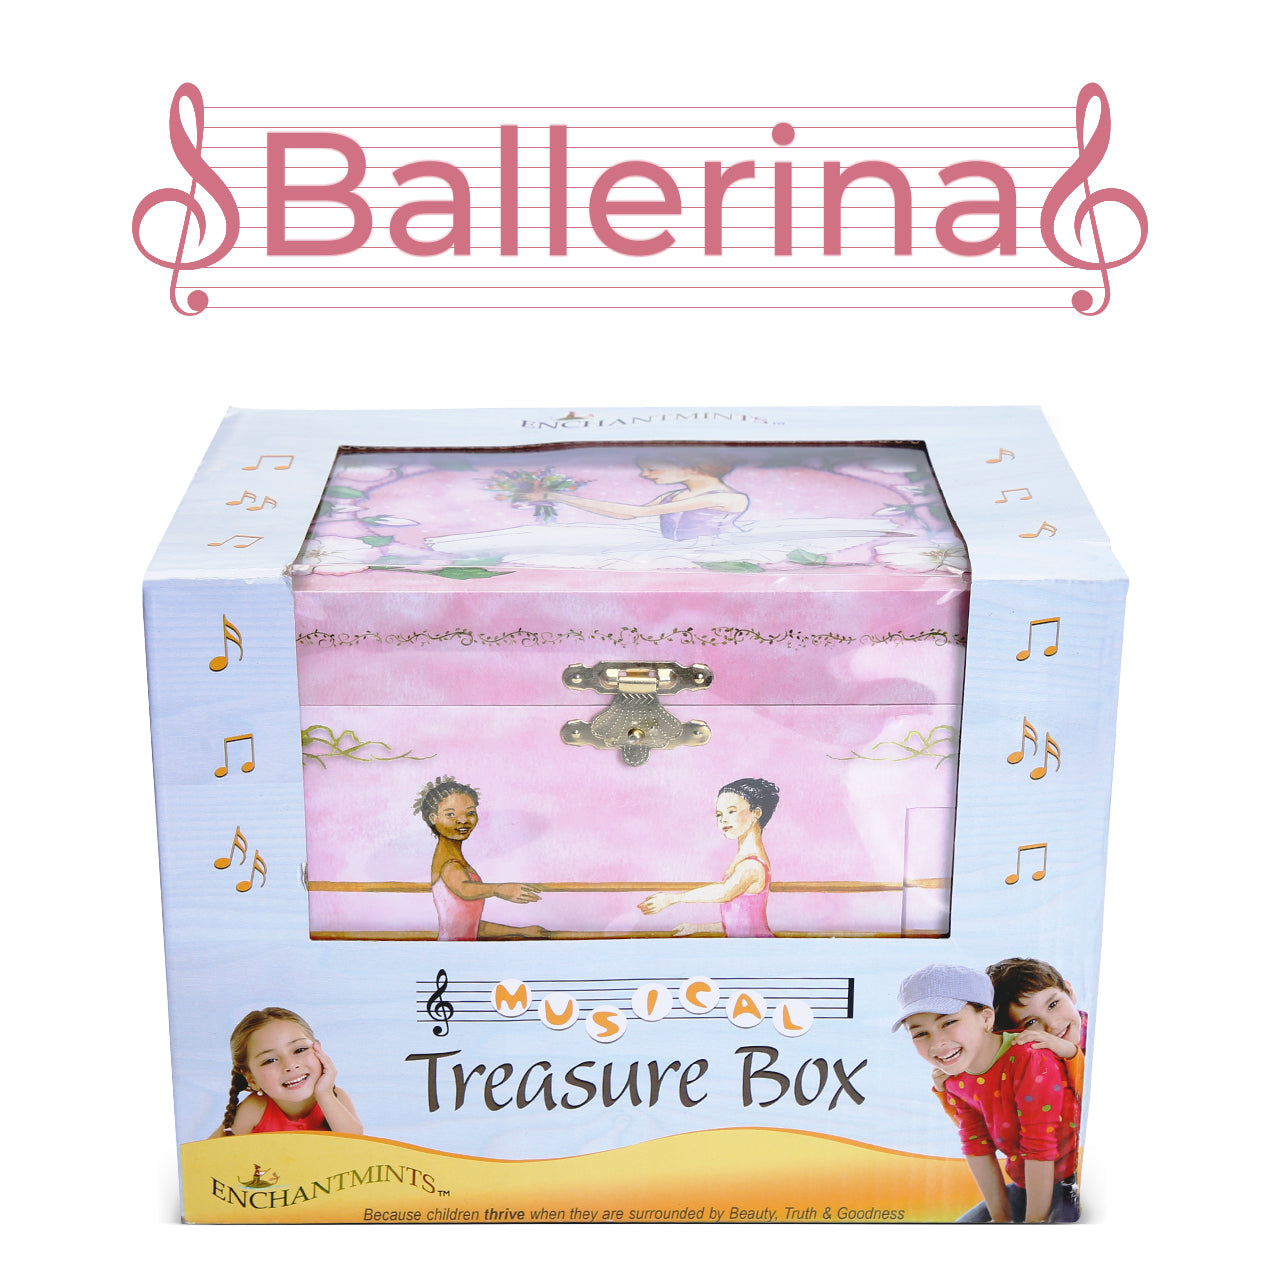 Black Ballerina Musical Jewelry Box - Swan Lake Tune